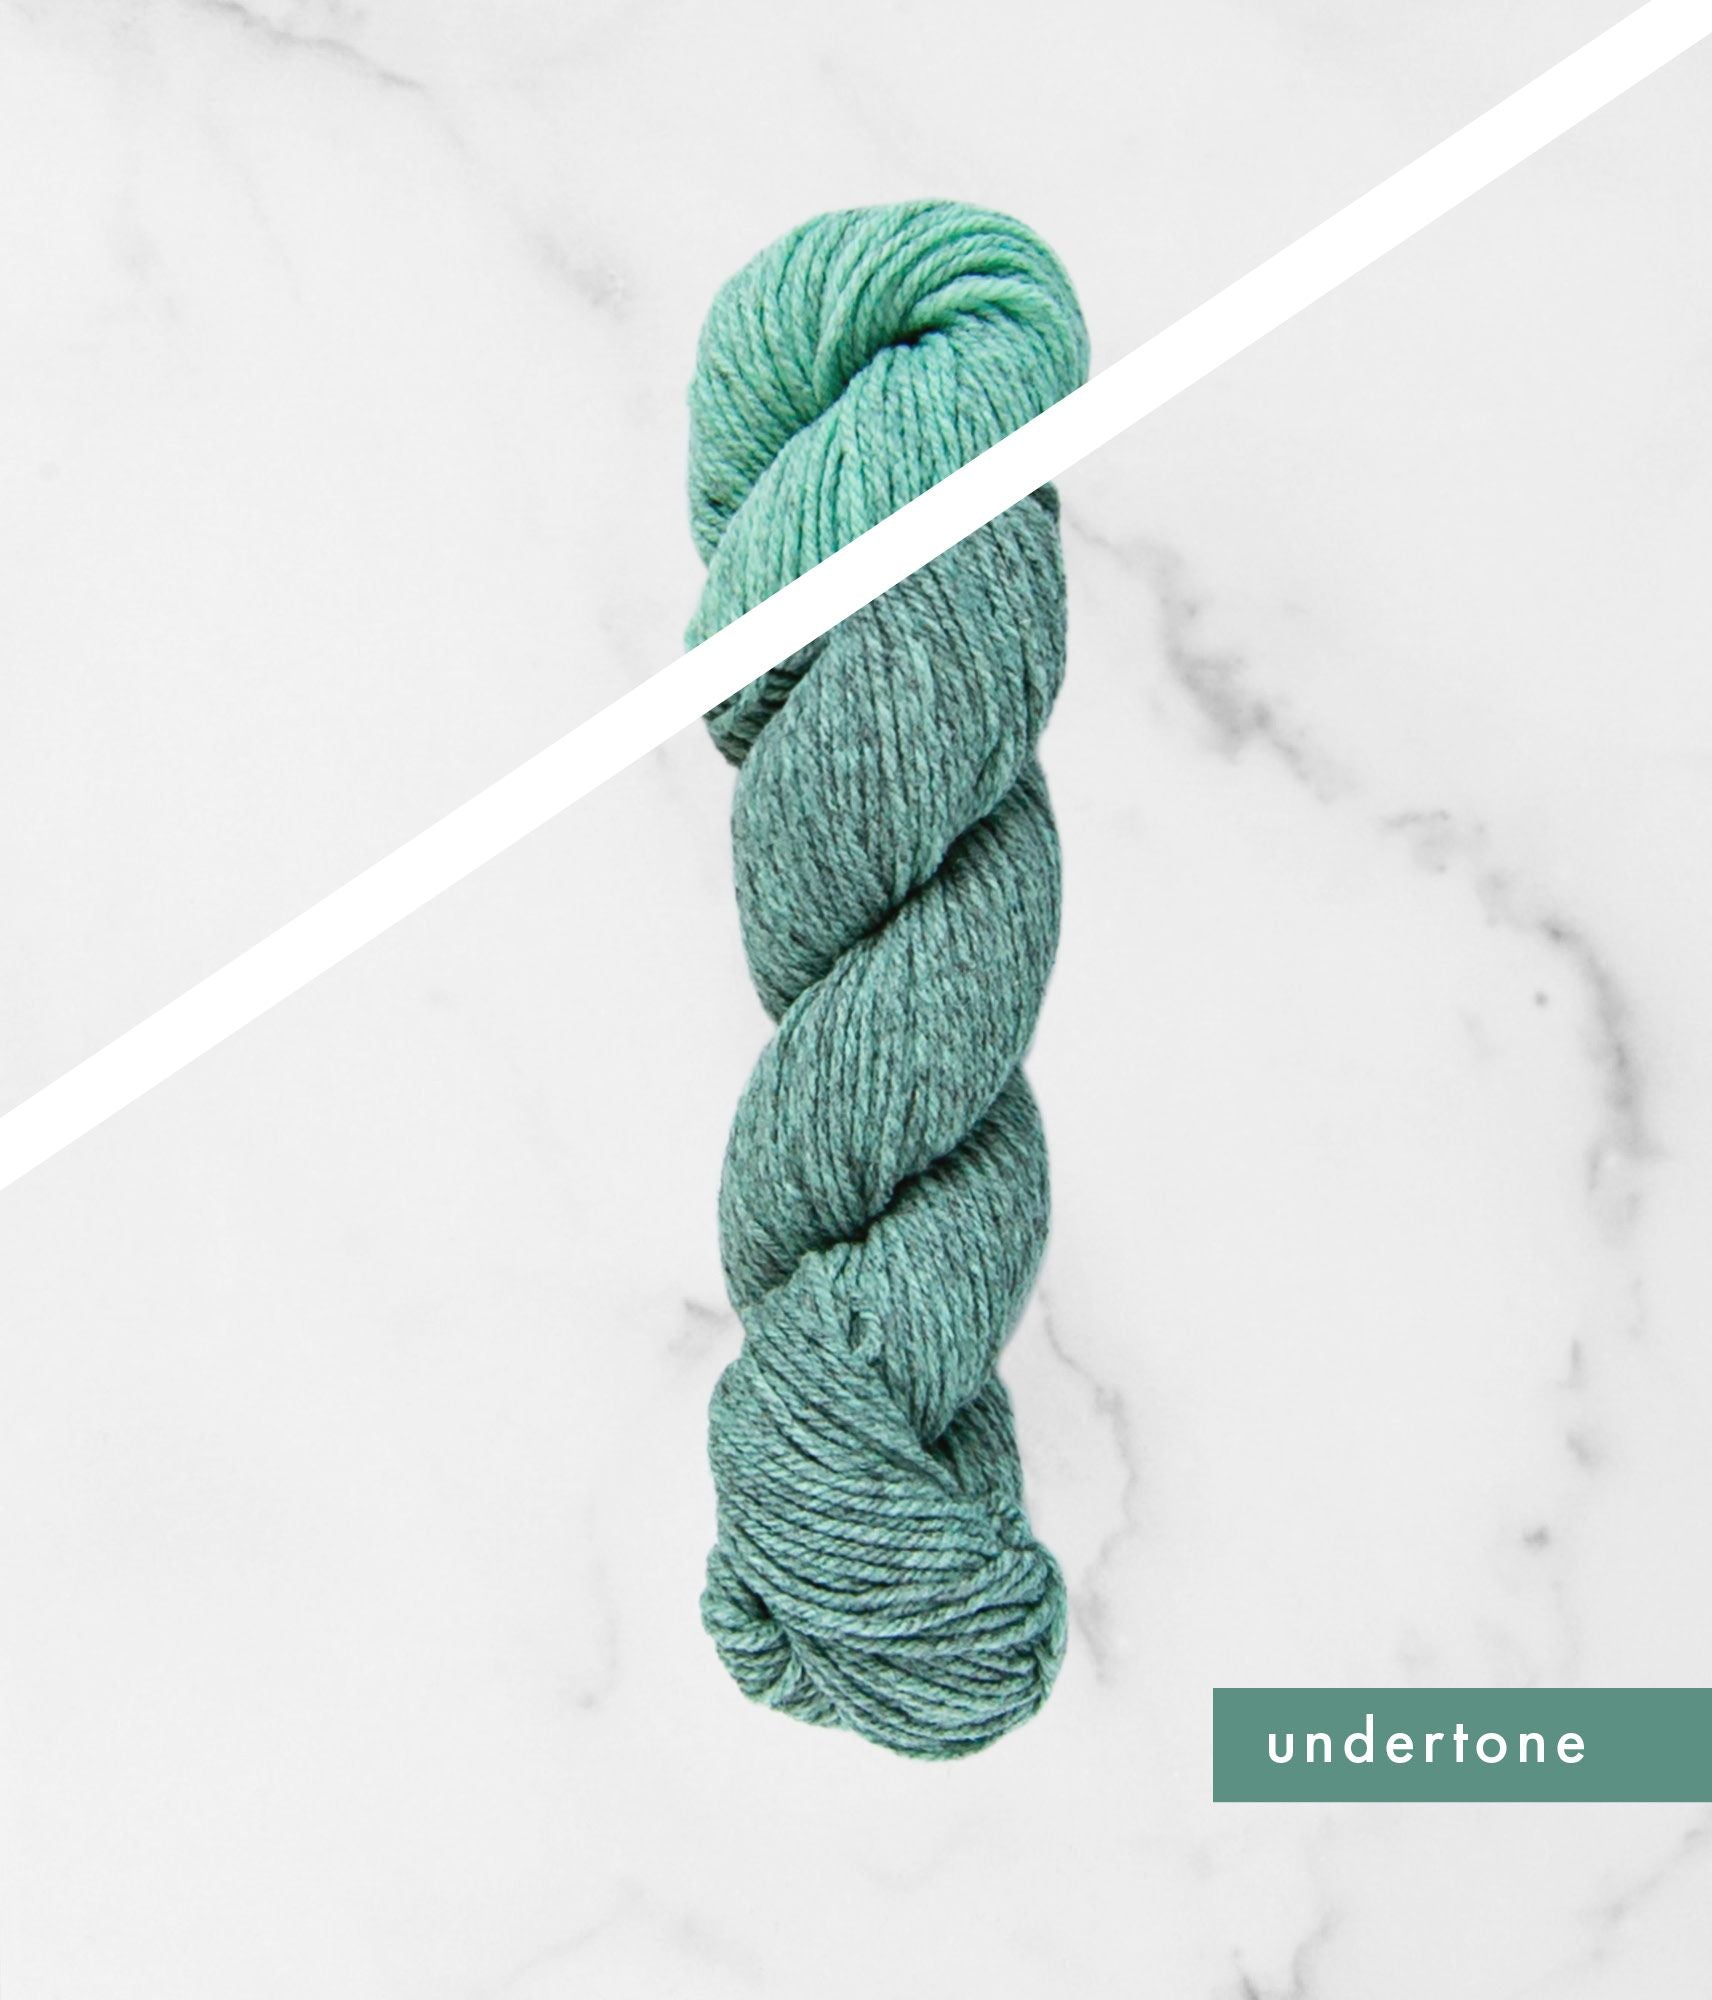 Aqua overtone and undertone BT Tones hanks of yarn